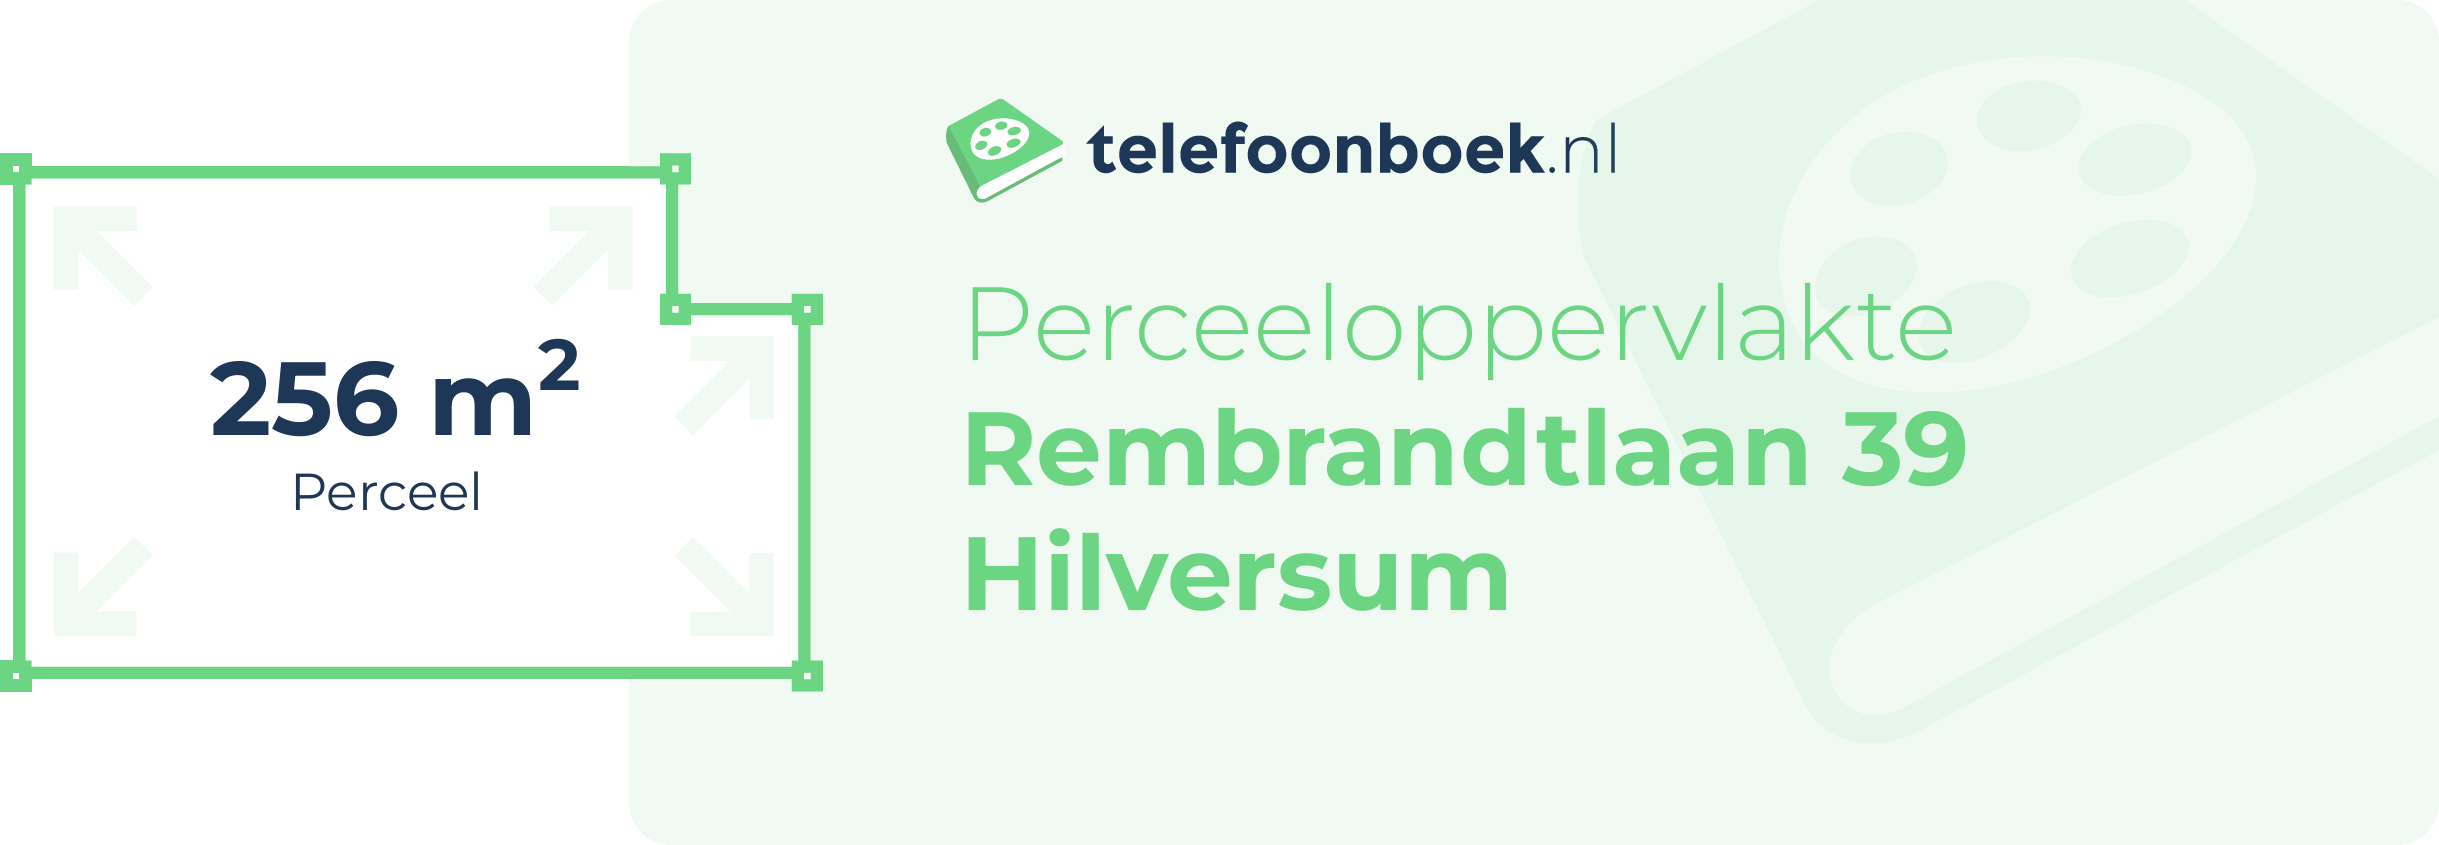 Perceeloppervlakte Rembrandtlaan 39 Hilversum